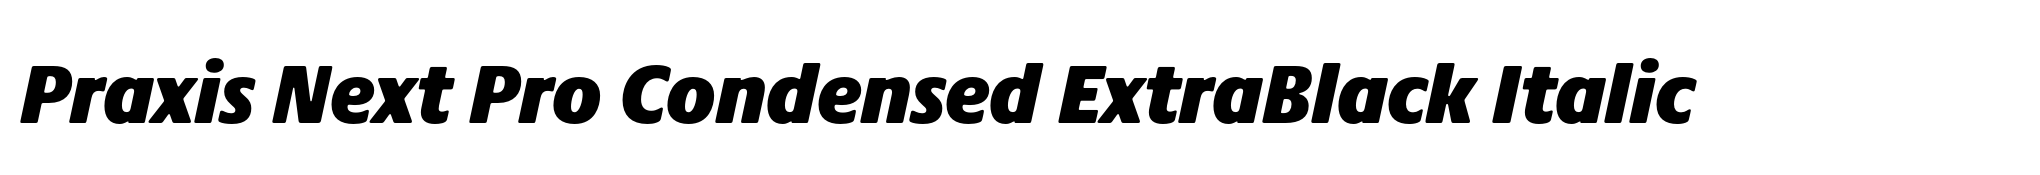 Praxis Next Pro Condensed ExtraBlack Italic image